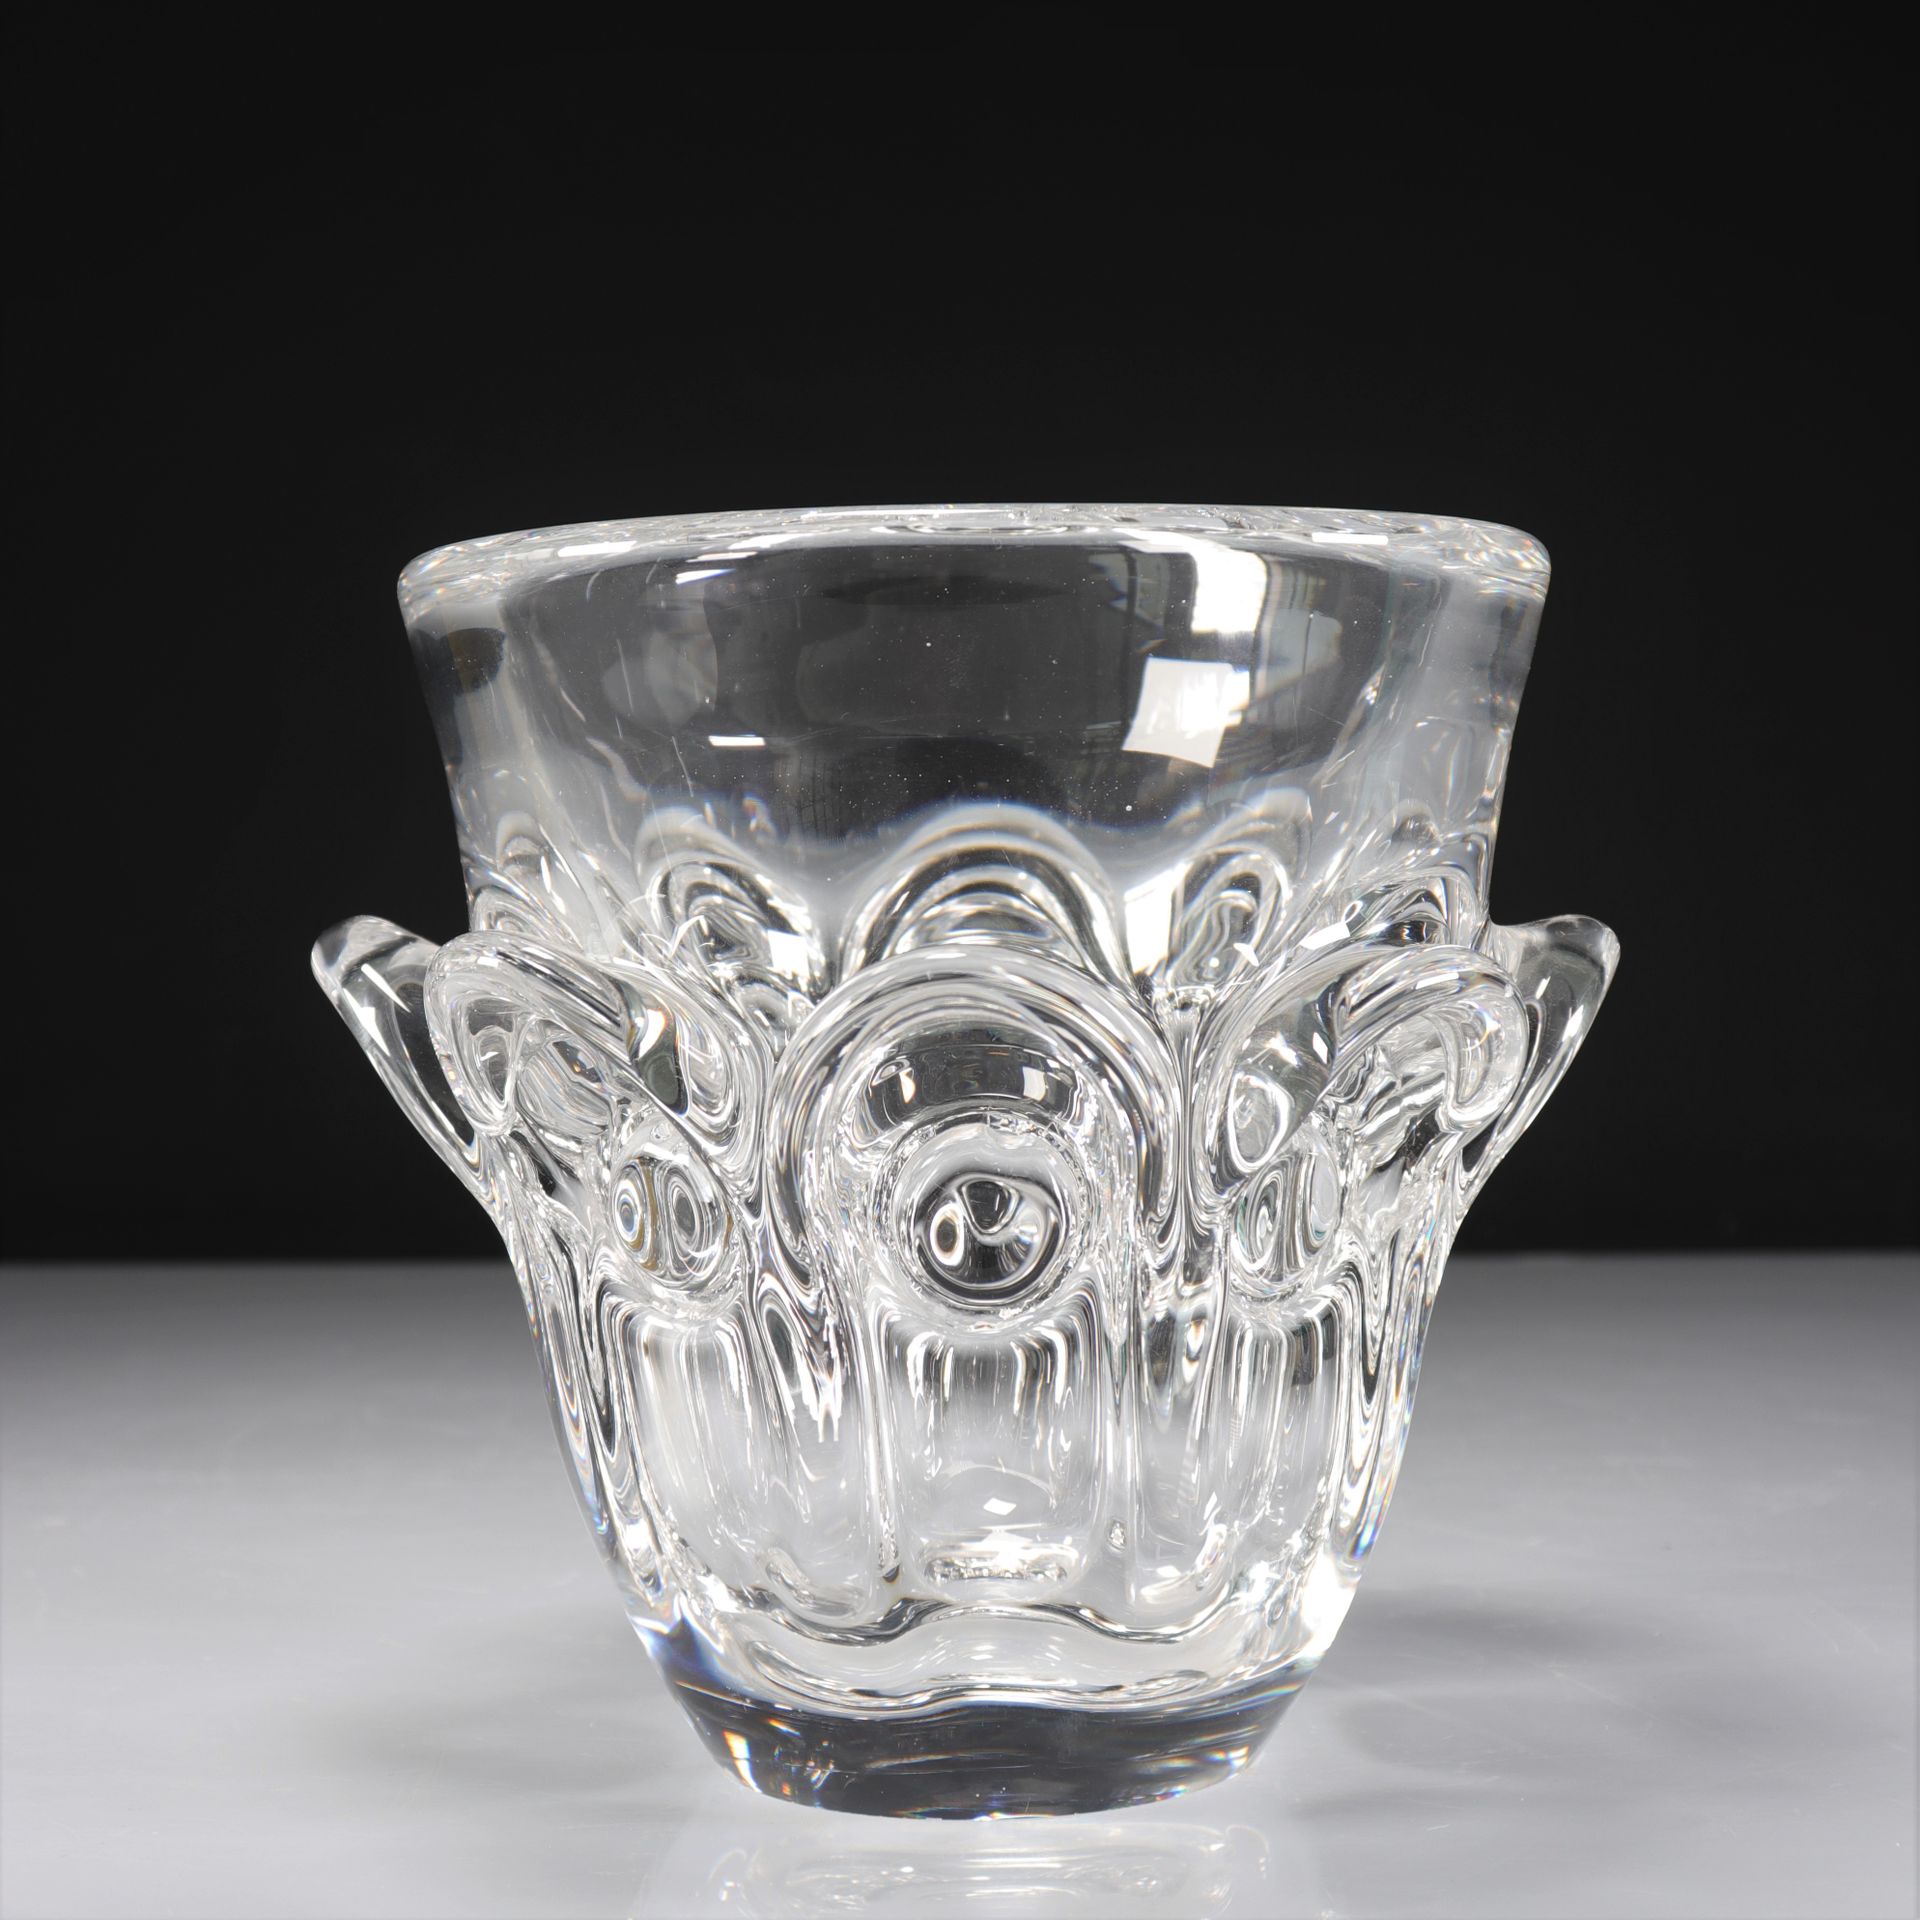 Vase Saint-Lambert. Guido Bon 圣兰伯特花瓶。Guido Bon
重量: 7.00 kg
地区: 比利时
尺寸: H 200 D 2&hellip;